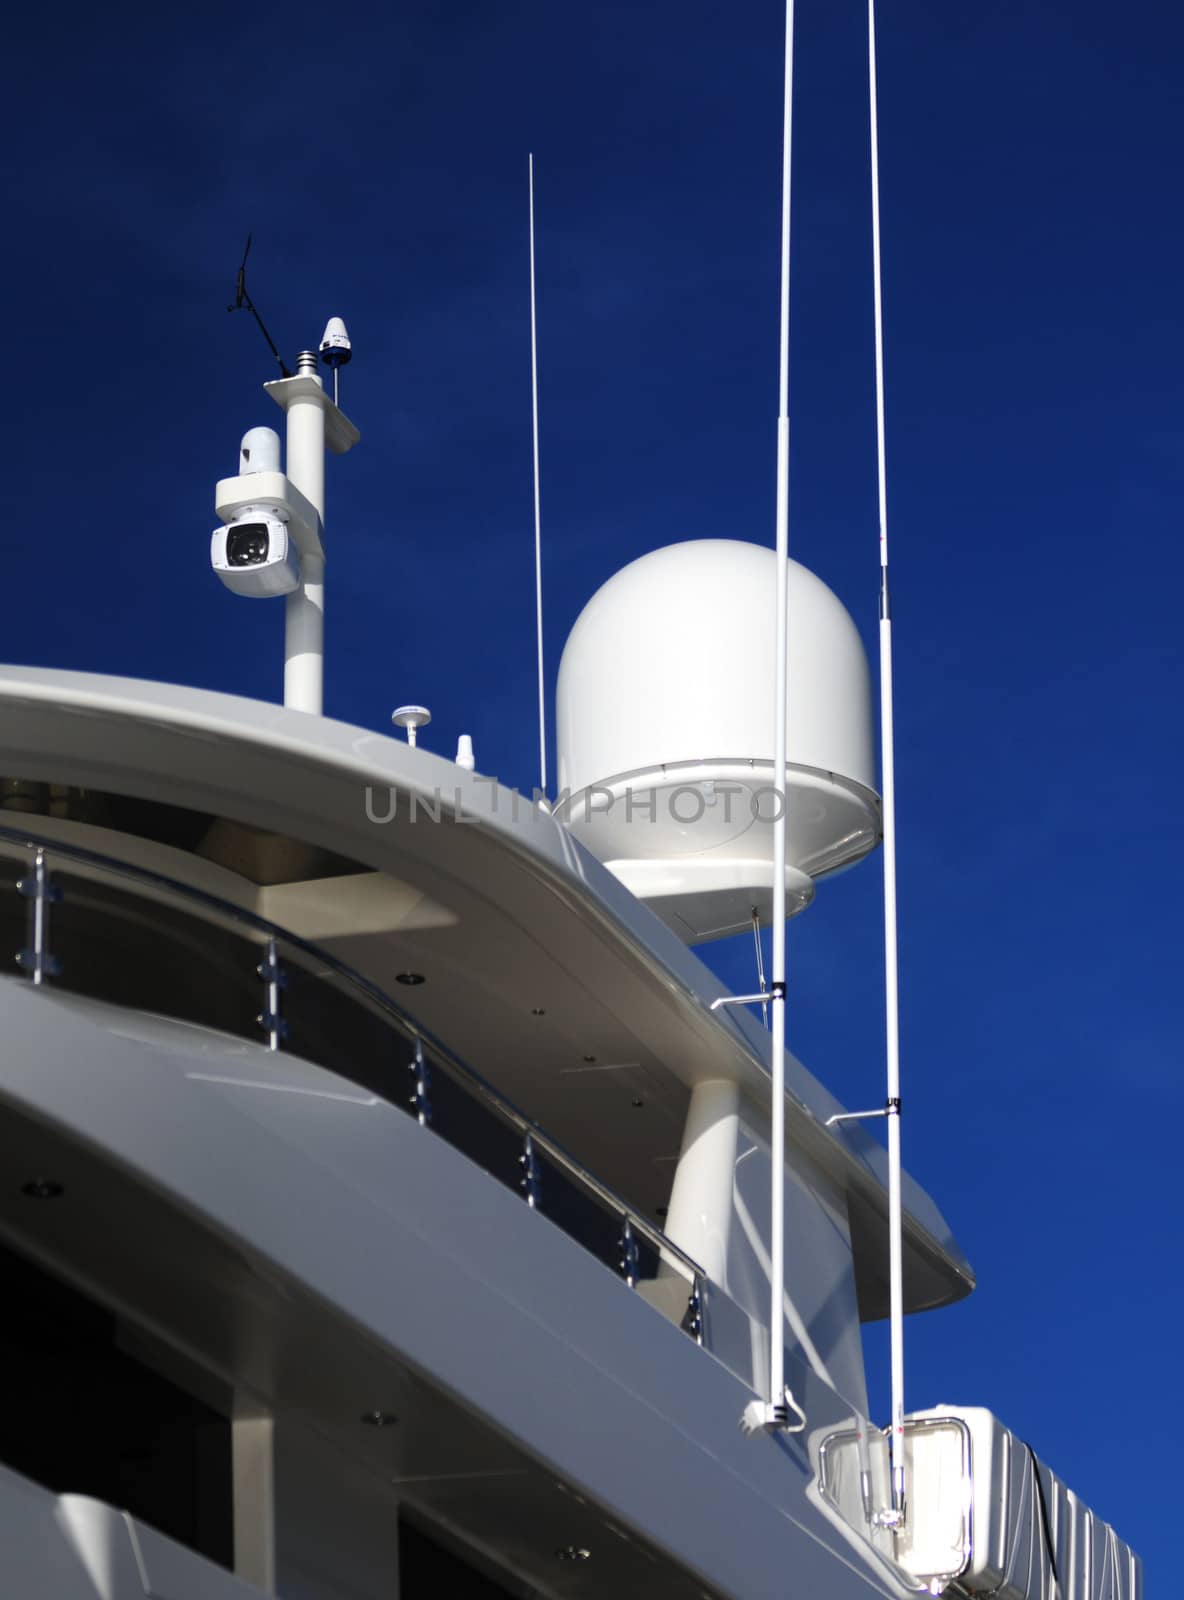 radar and night vision camera on boat by ftlaudgirl